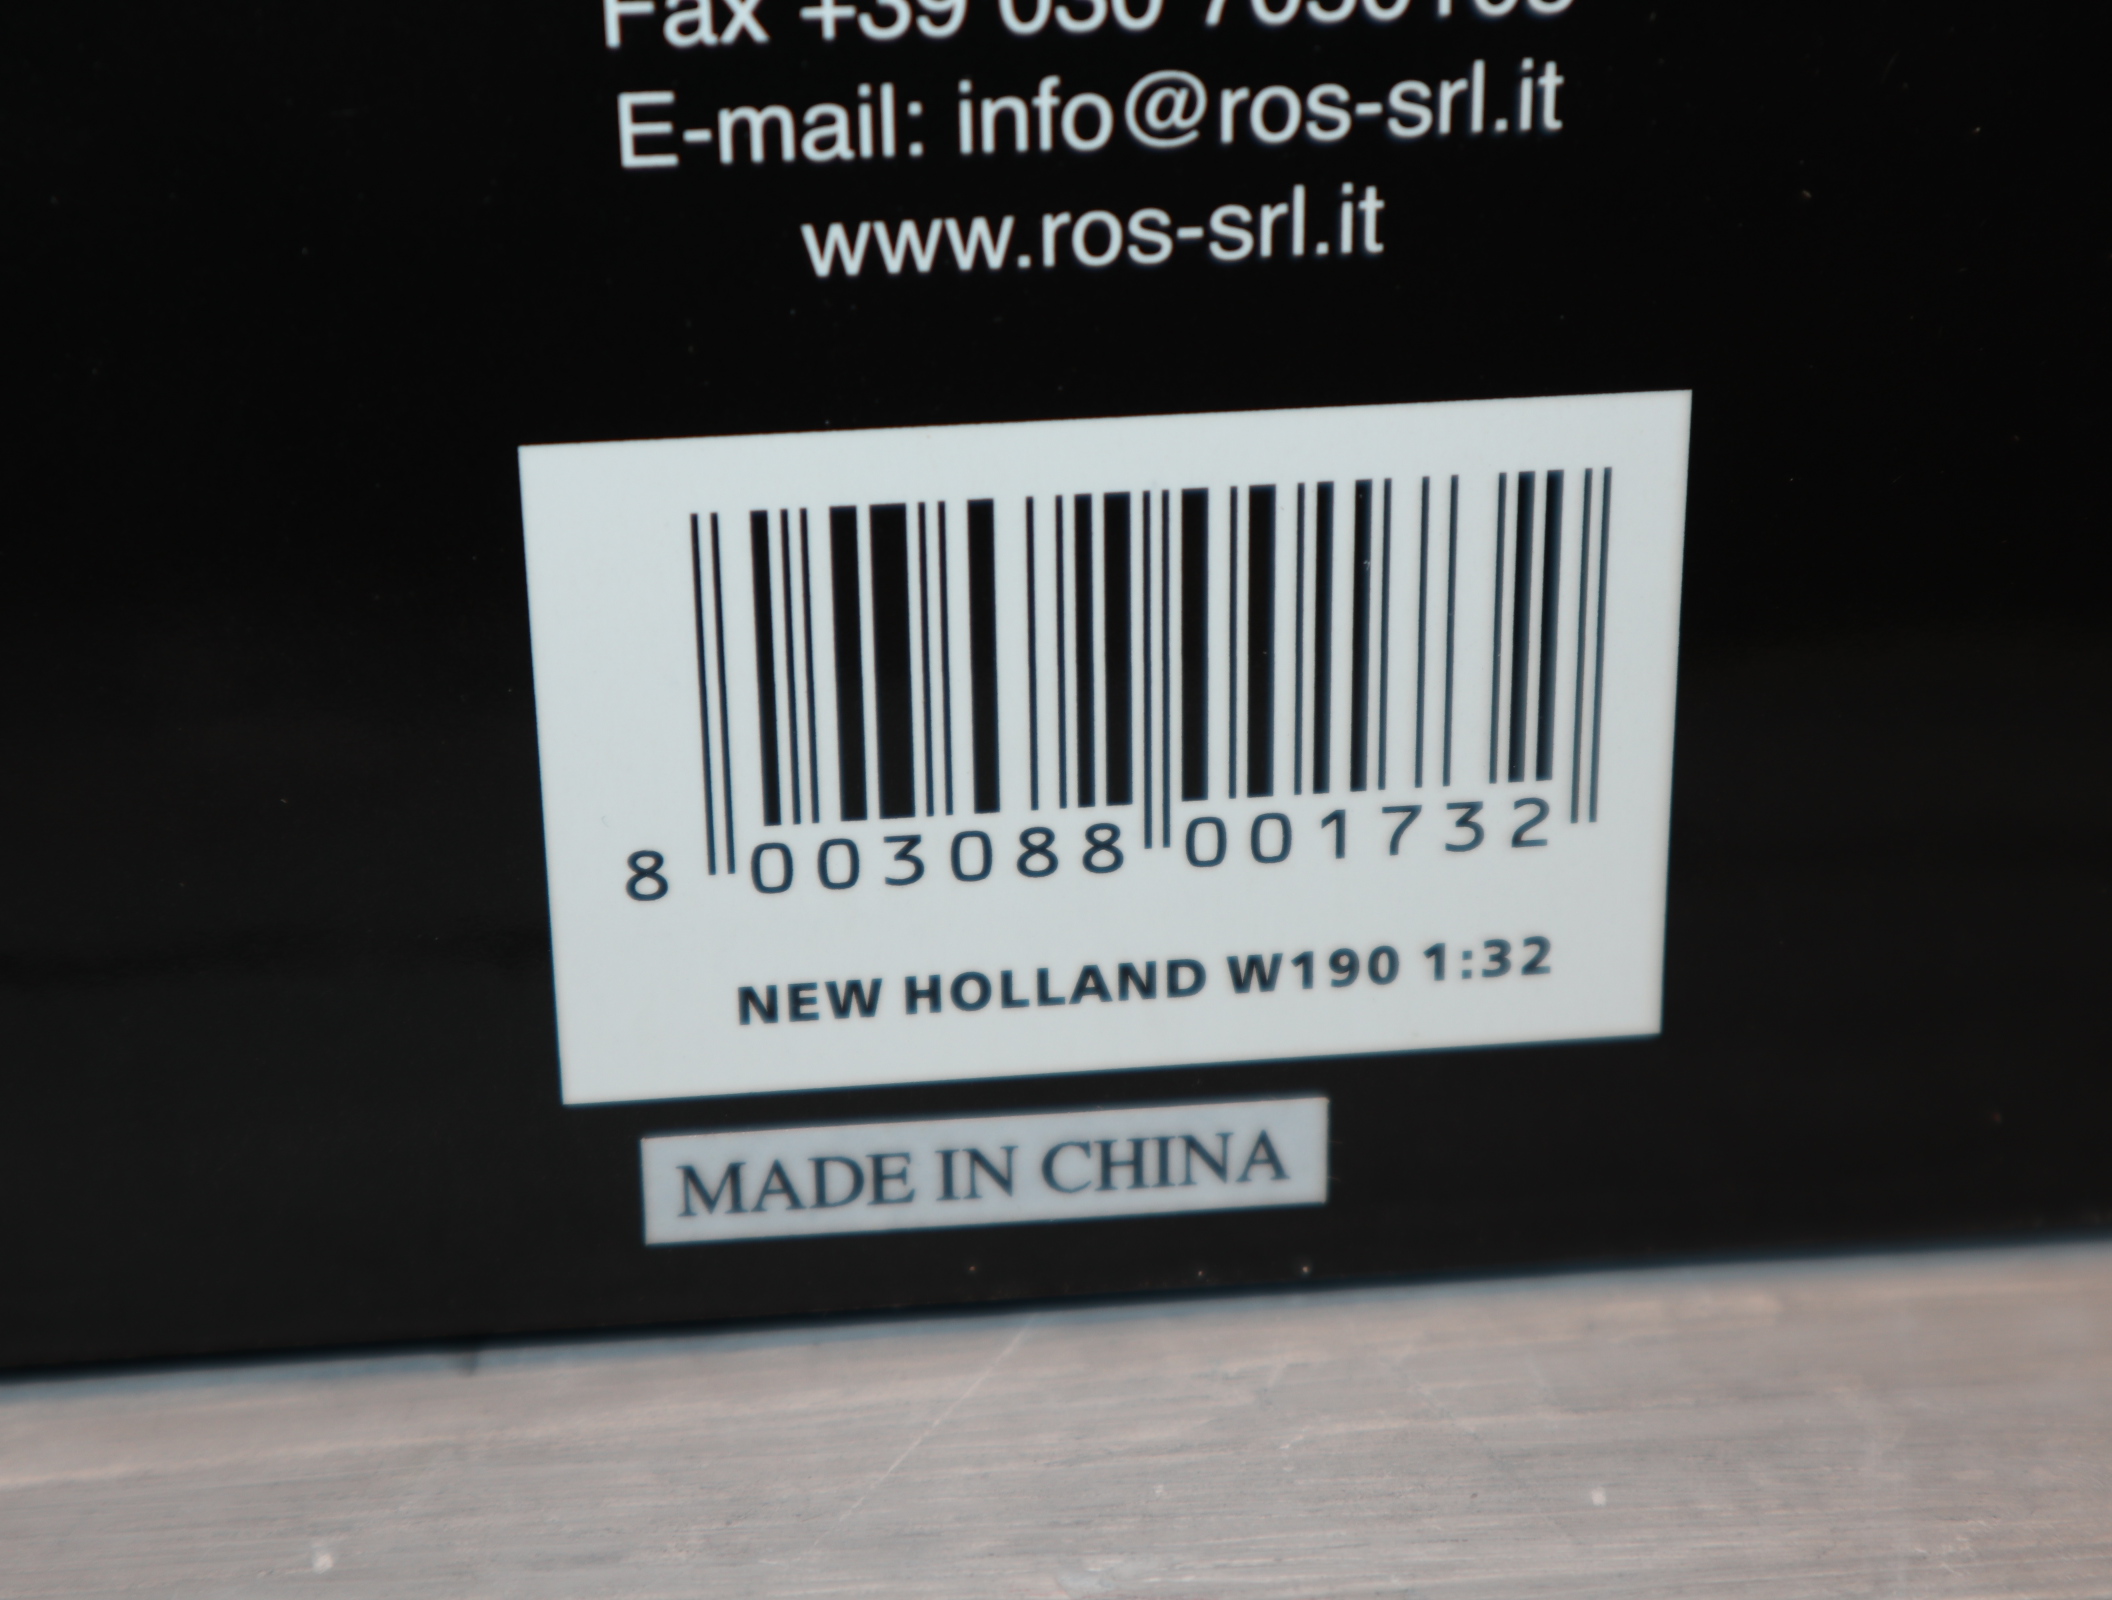 ROS 00173.2 in 1:32 Radlader New Holland W190, NEU in OVP